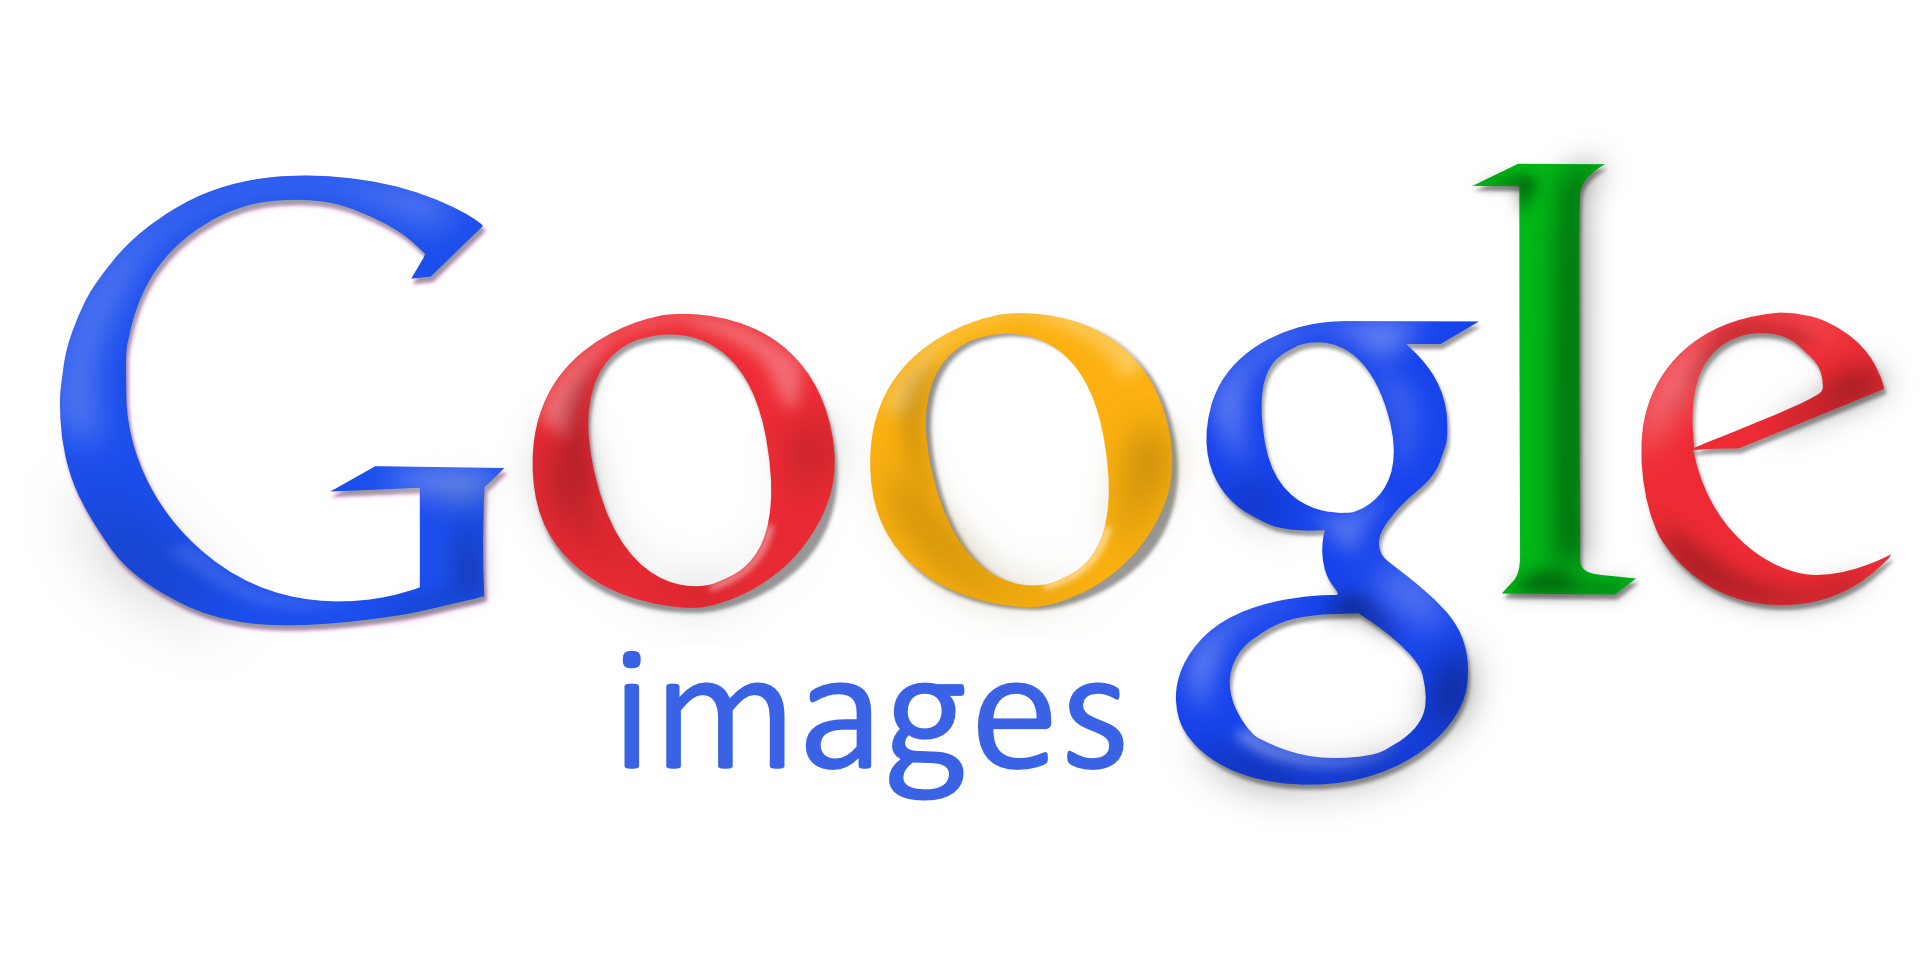 google reverse image lookup